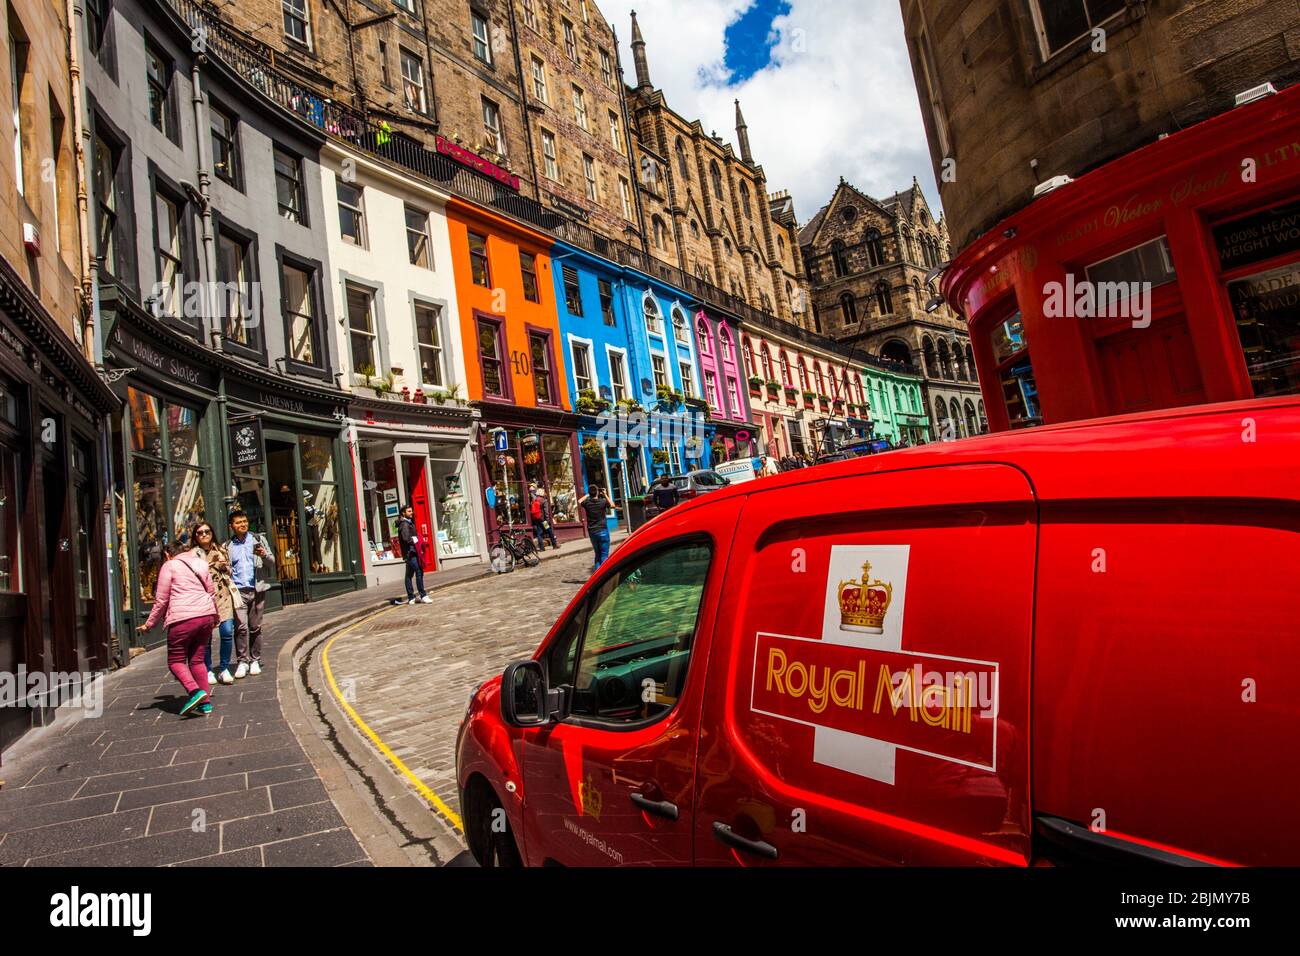 Royal Mail car in Victoria Street, Old Town, Edinburgh, Scotland, United Kingdom, Europe Stock Photo